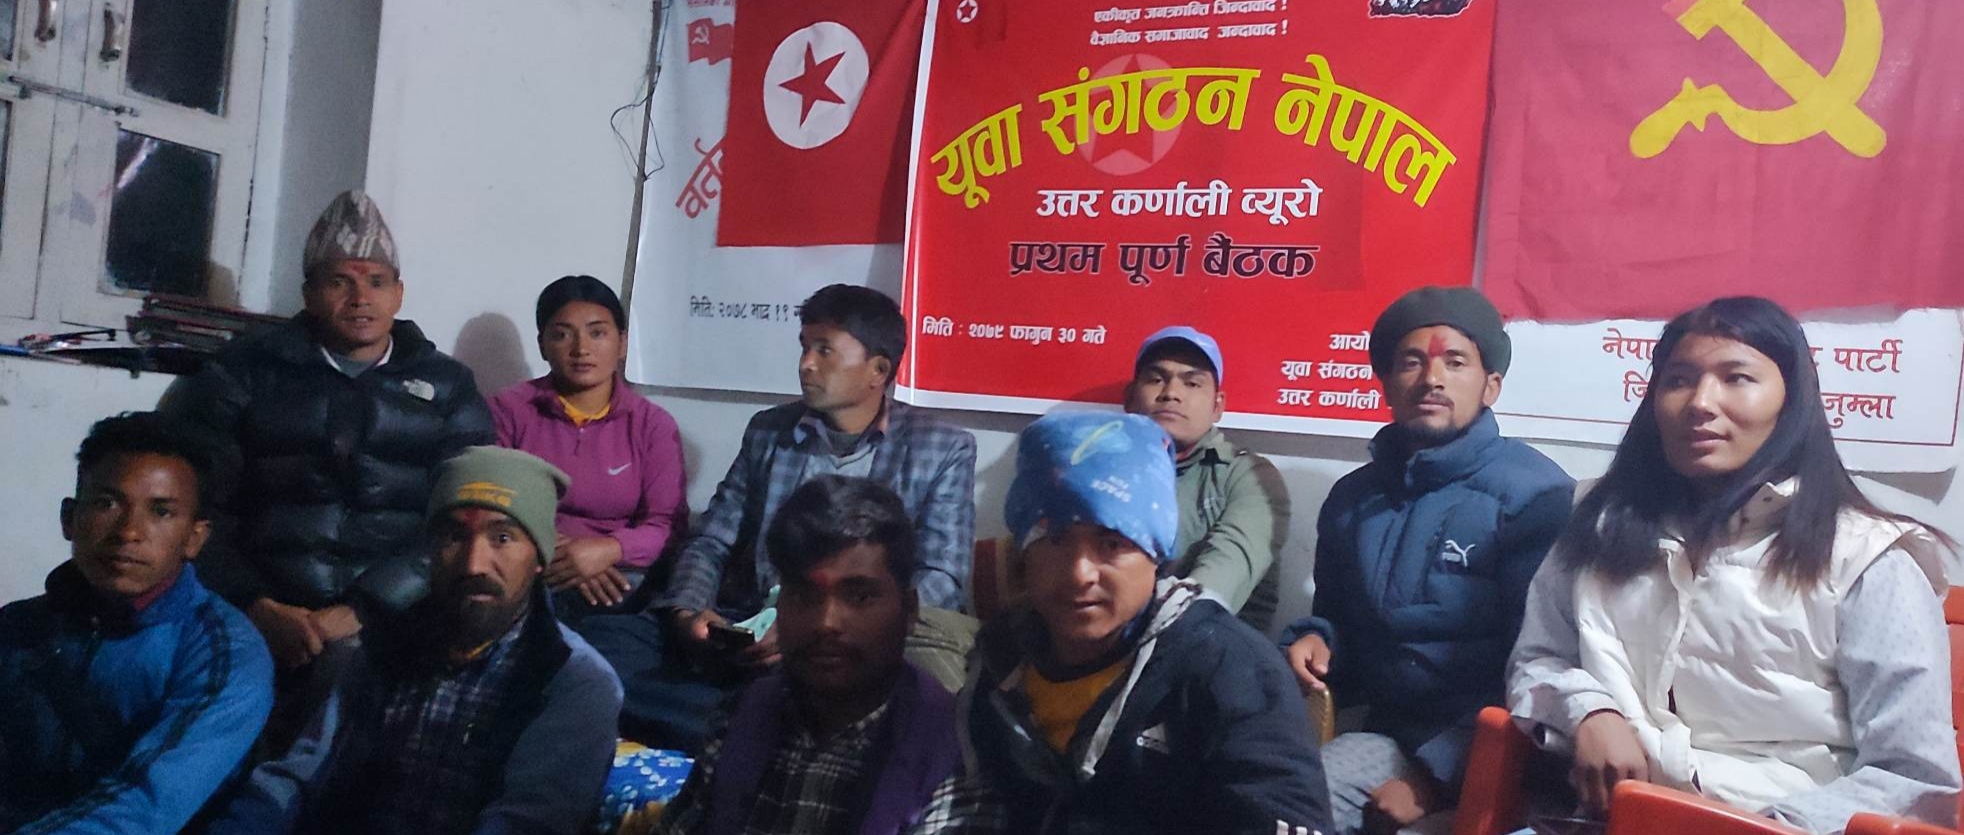 युवा संगठन नेपाल उत्तर कर्णालीद्वारा भ्रष्टाचारी र लघुवित्तलाई जनकार्बाही गर्ने निर्णय